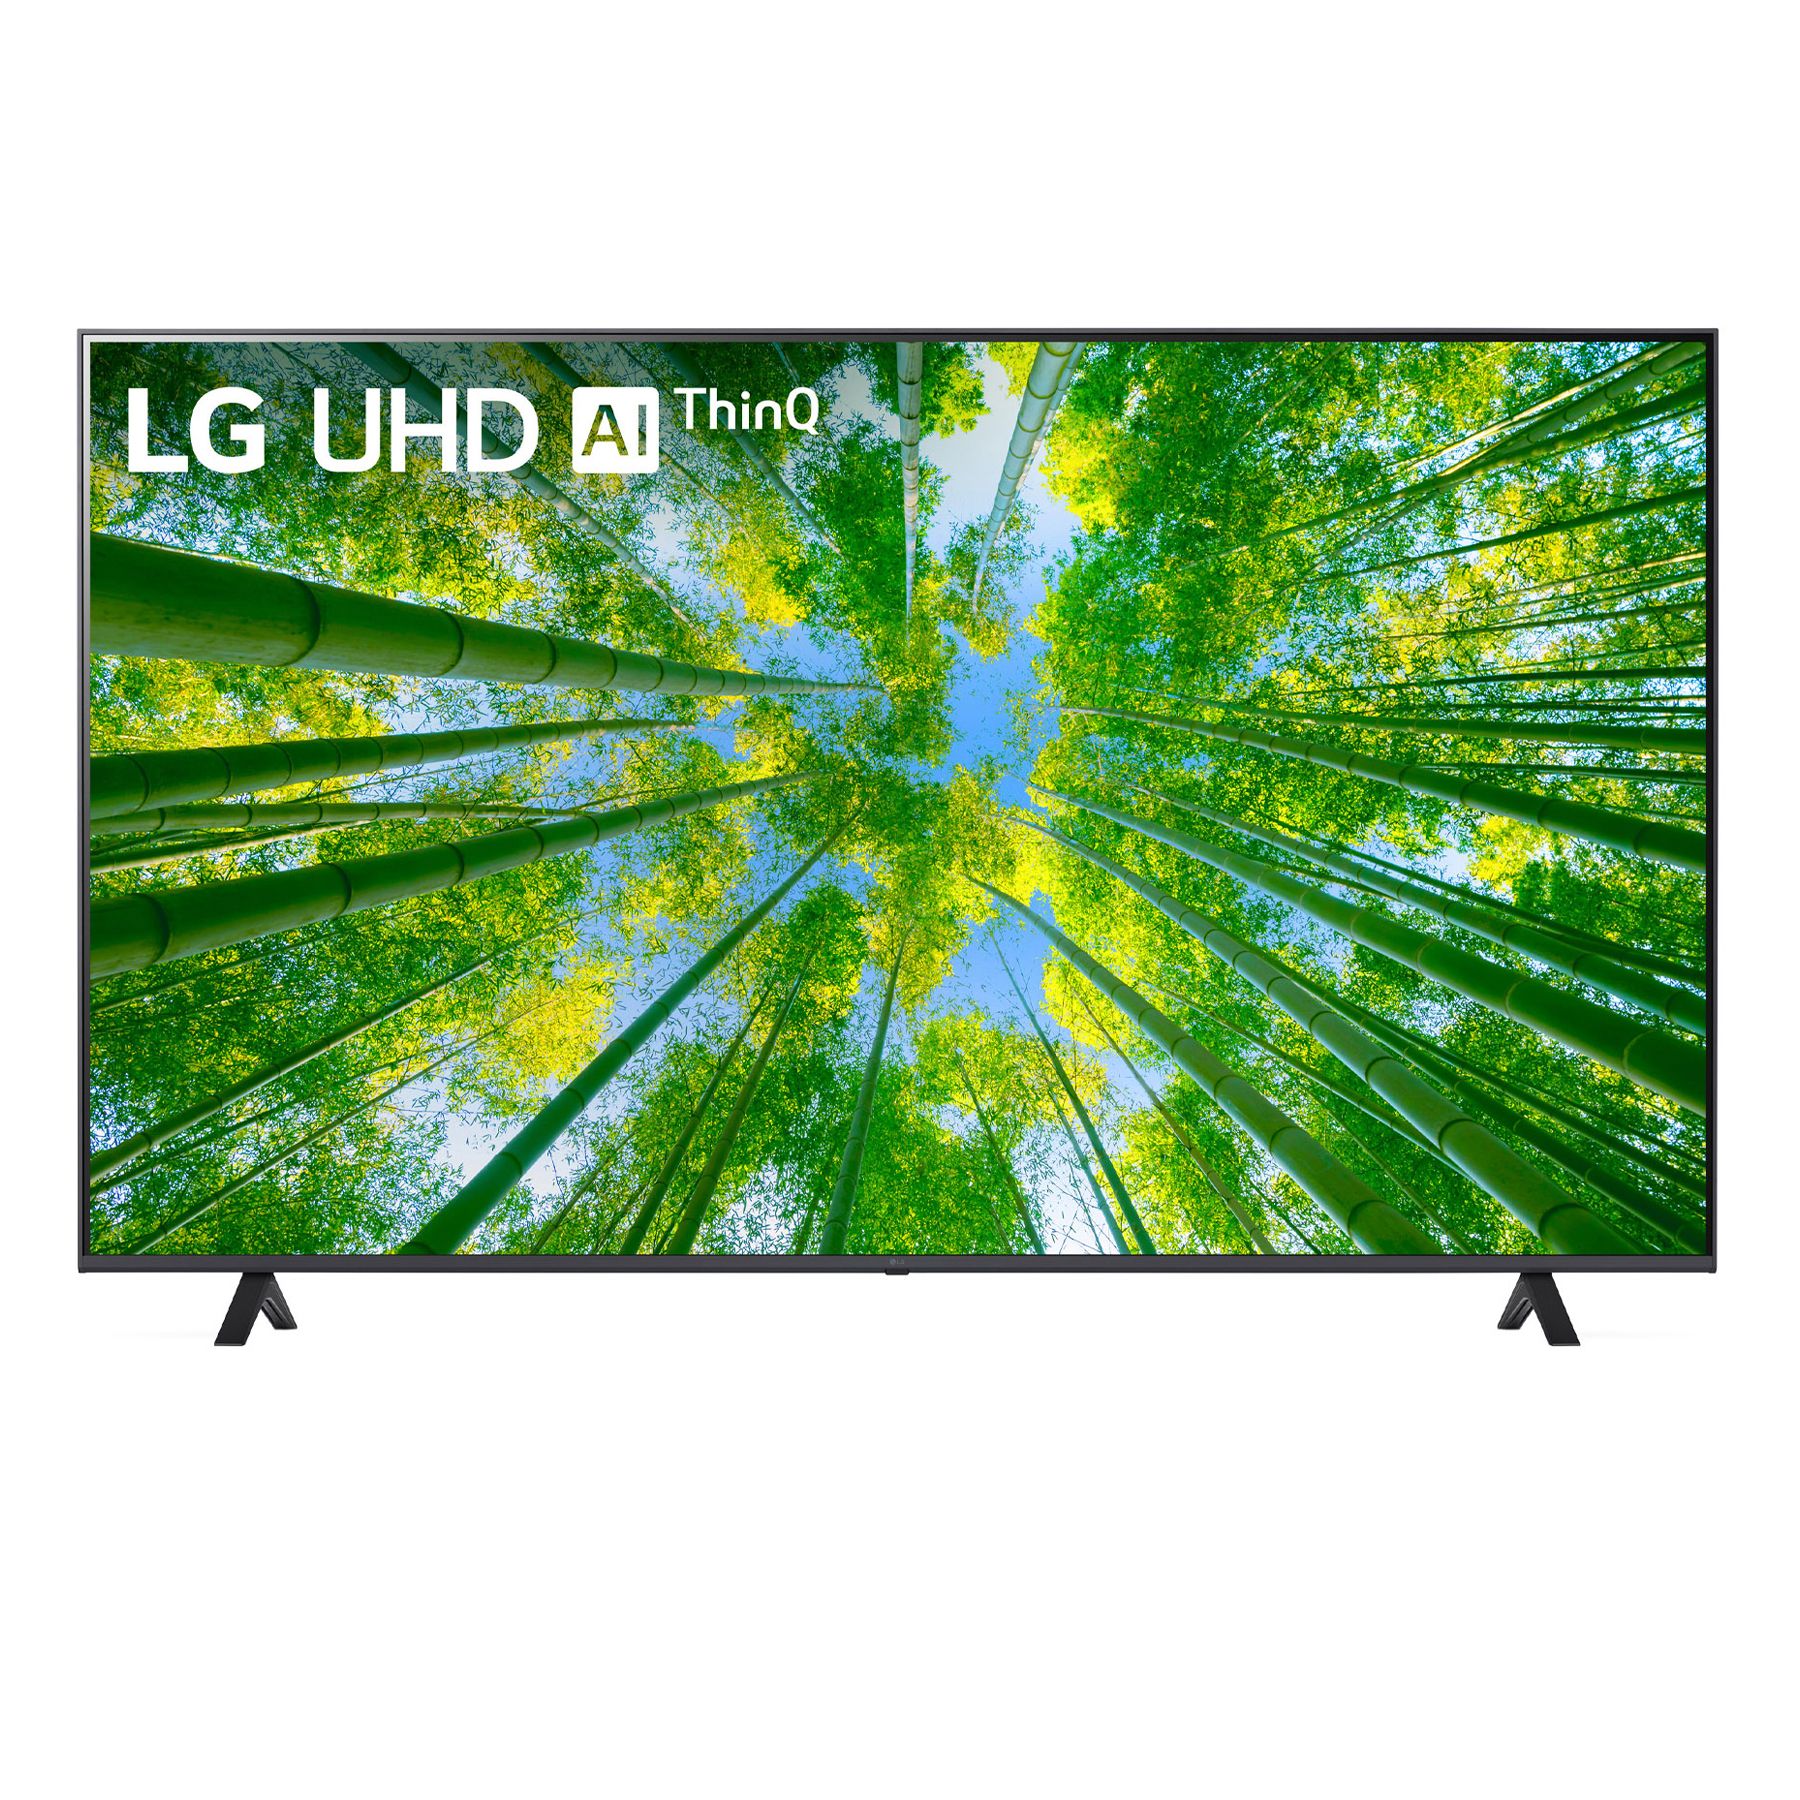 Televisor LG 50 Pulgadas Smart Tv 4K UHD Ai ThinQ - Con Control